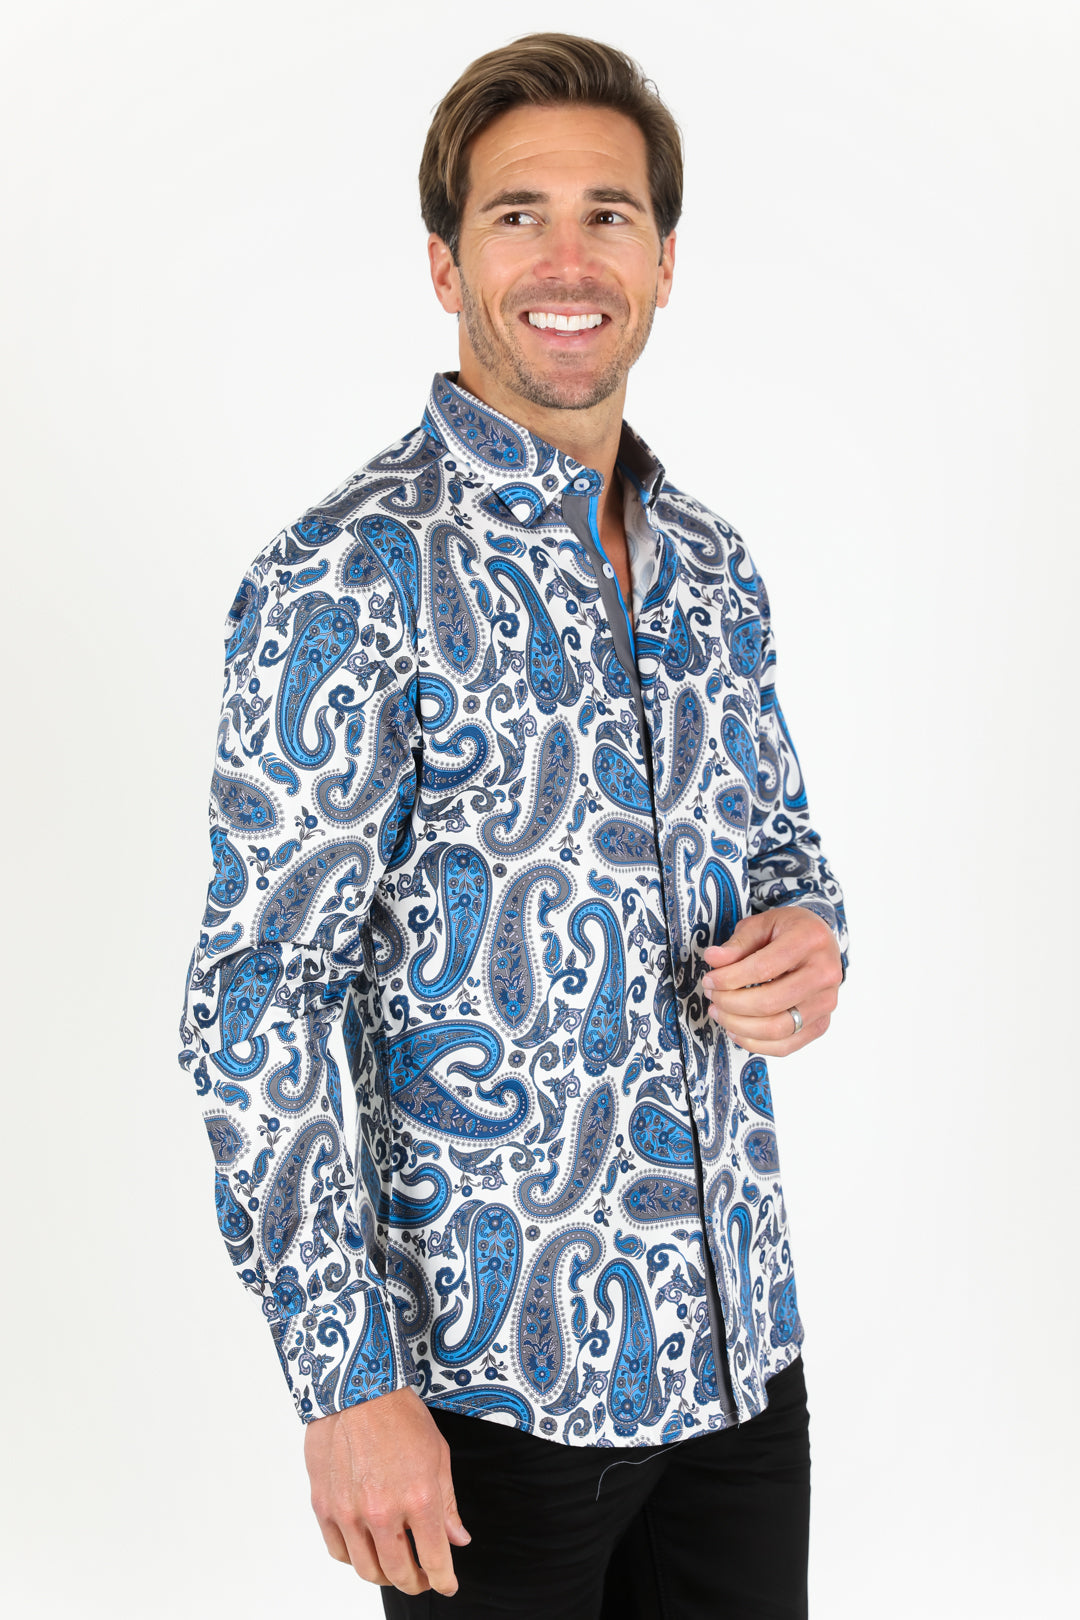 Satin Cotton/Spandex Long Sleeve Shirt - Blue